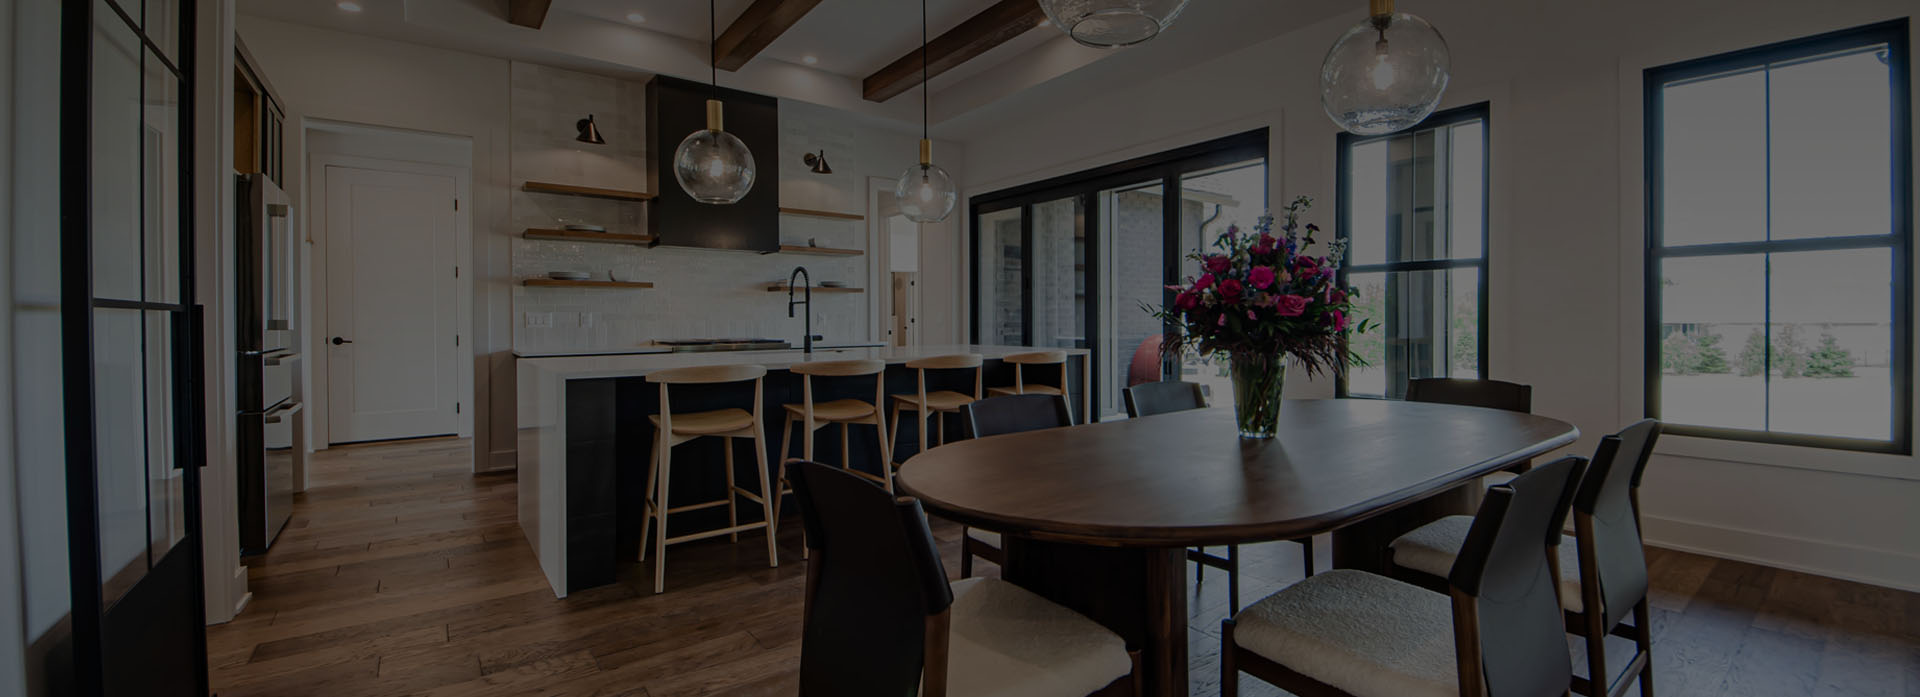 Design Homes interior dining area